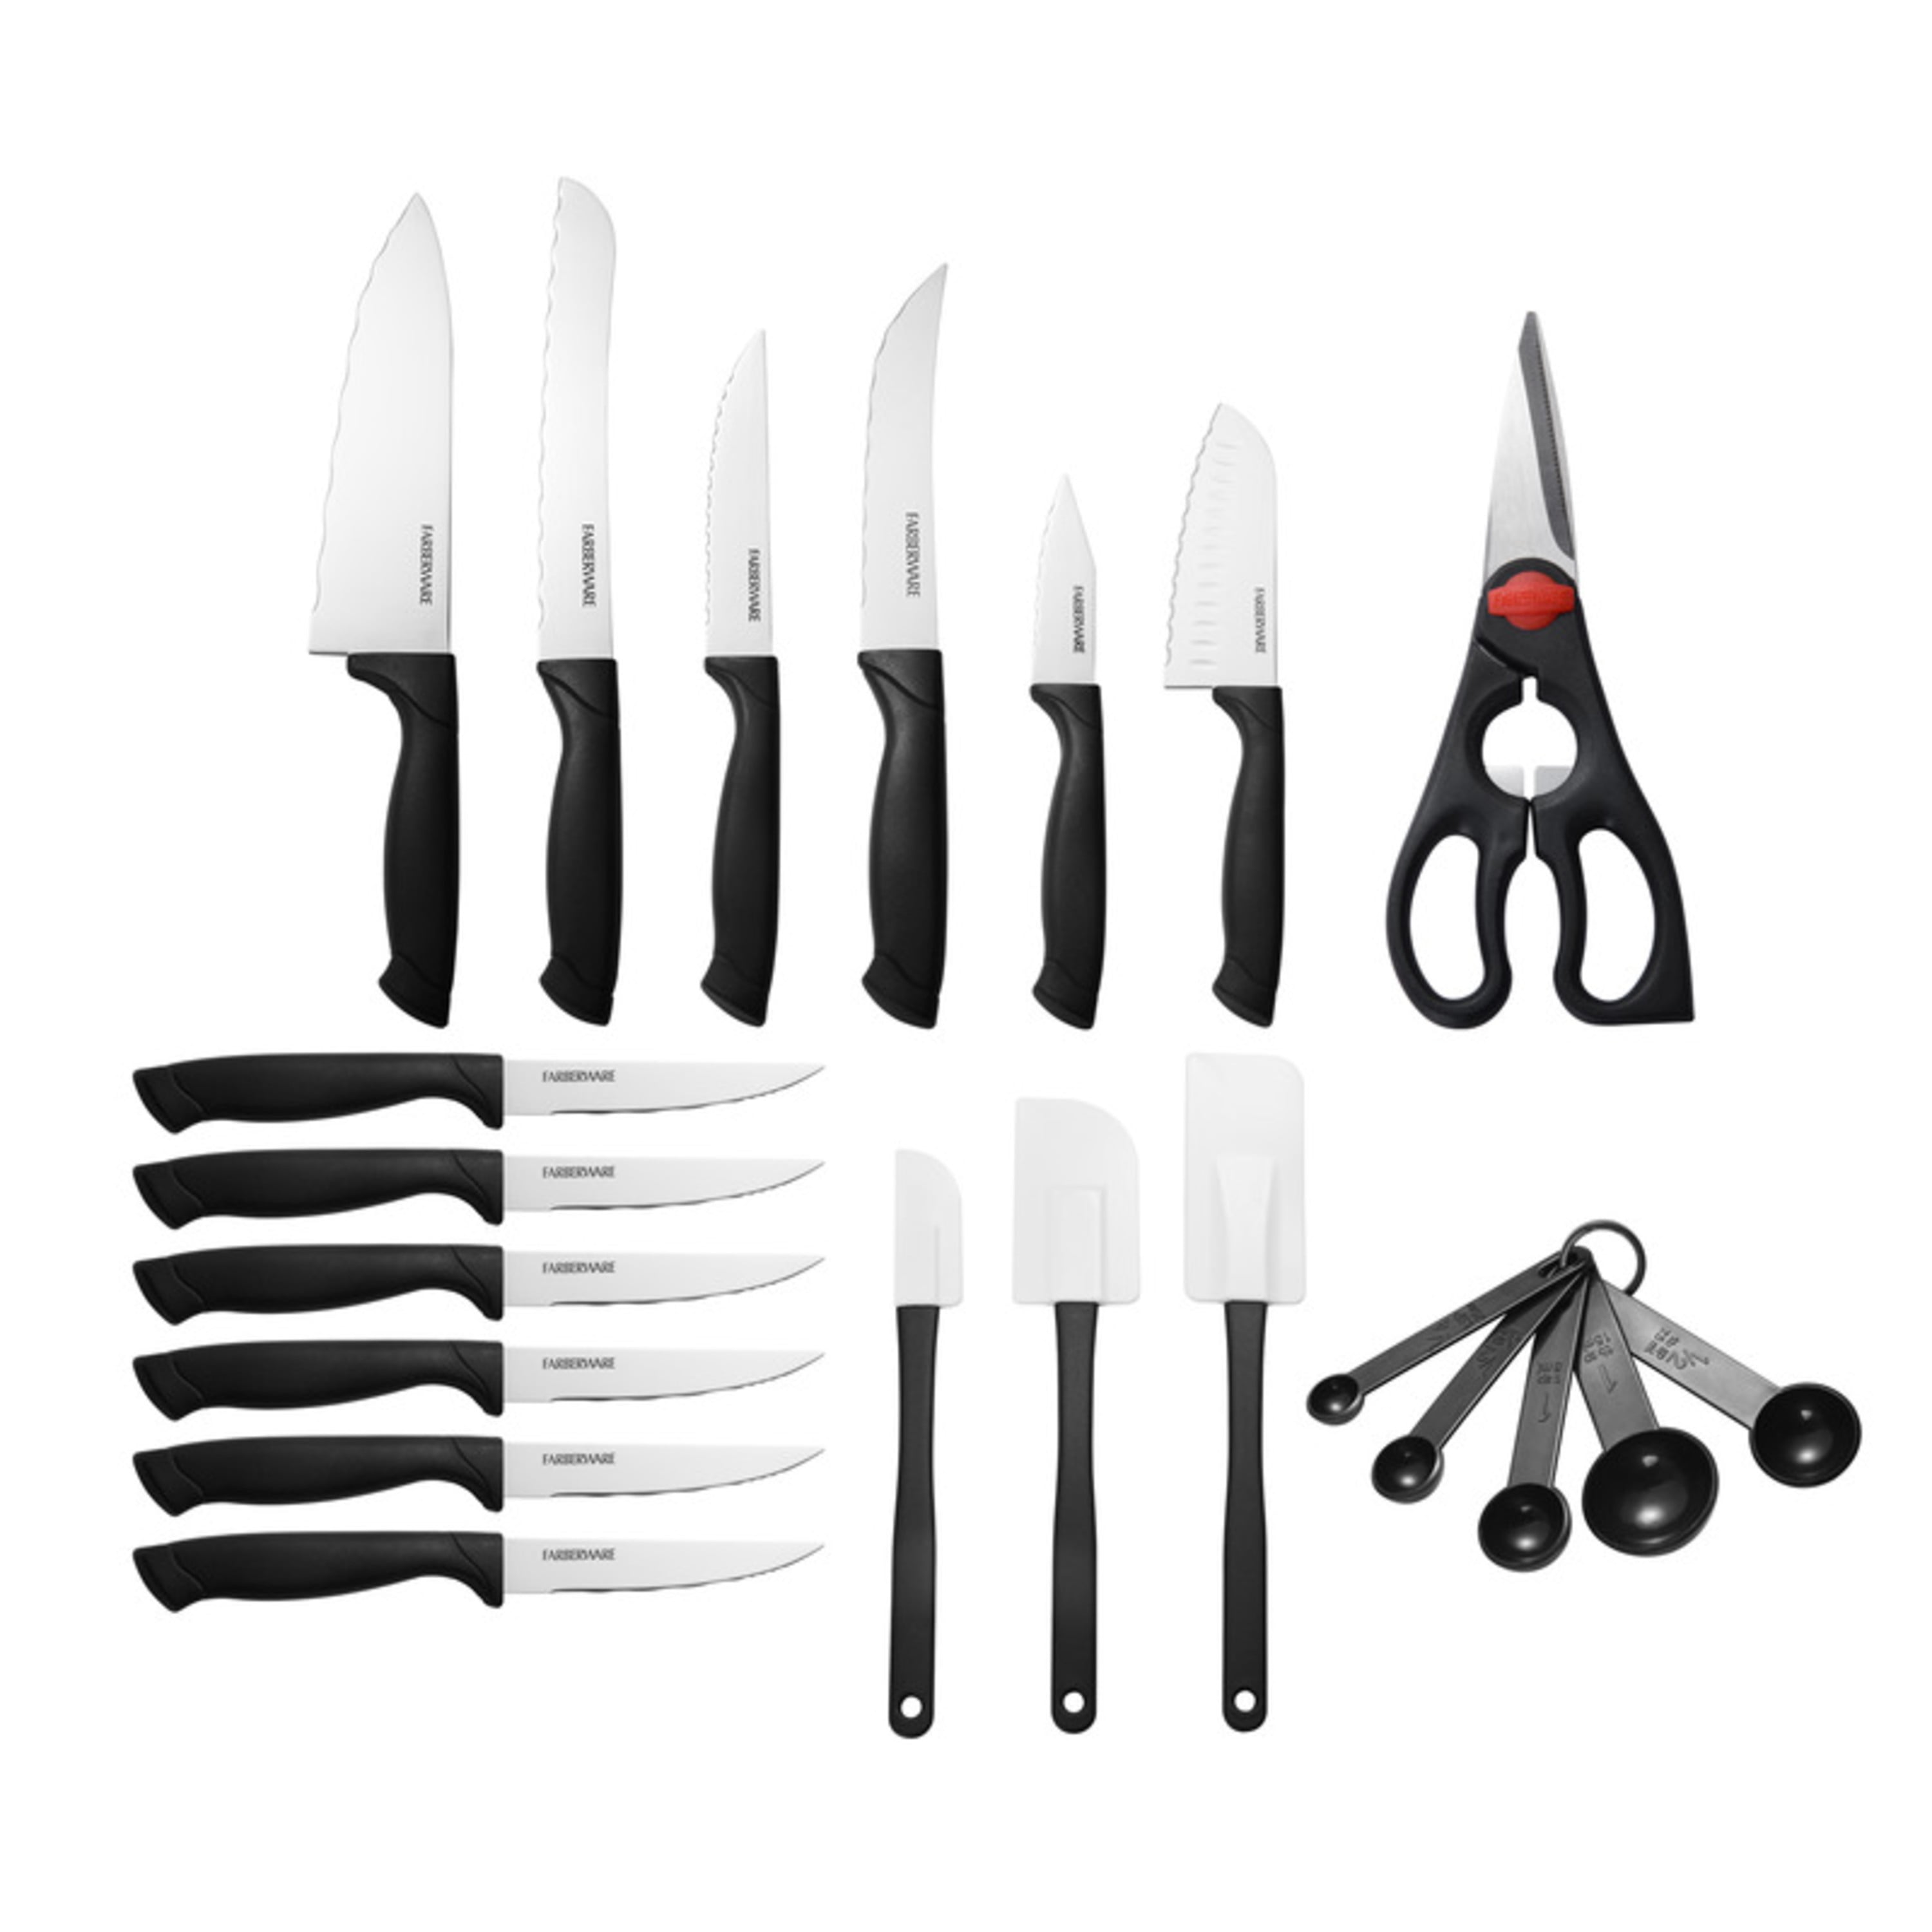 Farberware 13-pc. Knife Armor Dishwasher Safe Cutlery Set